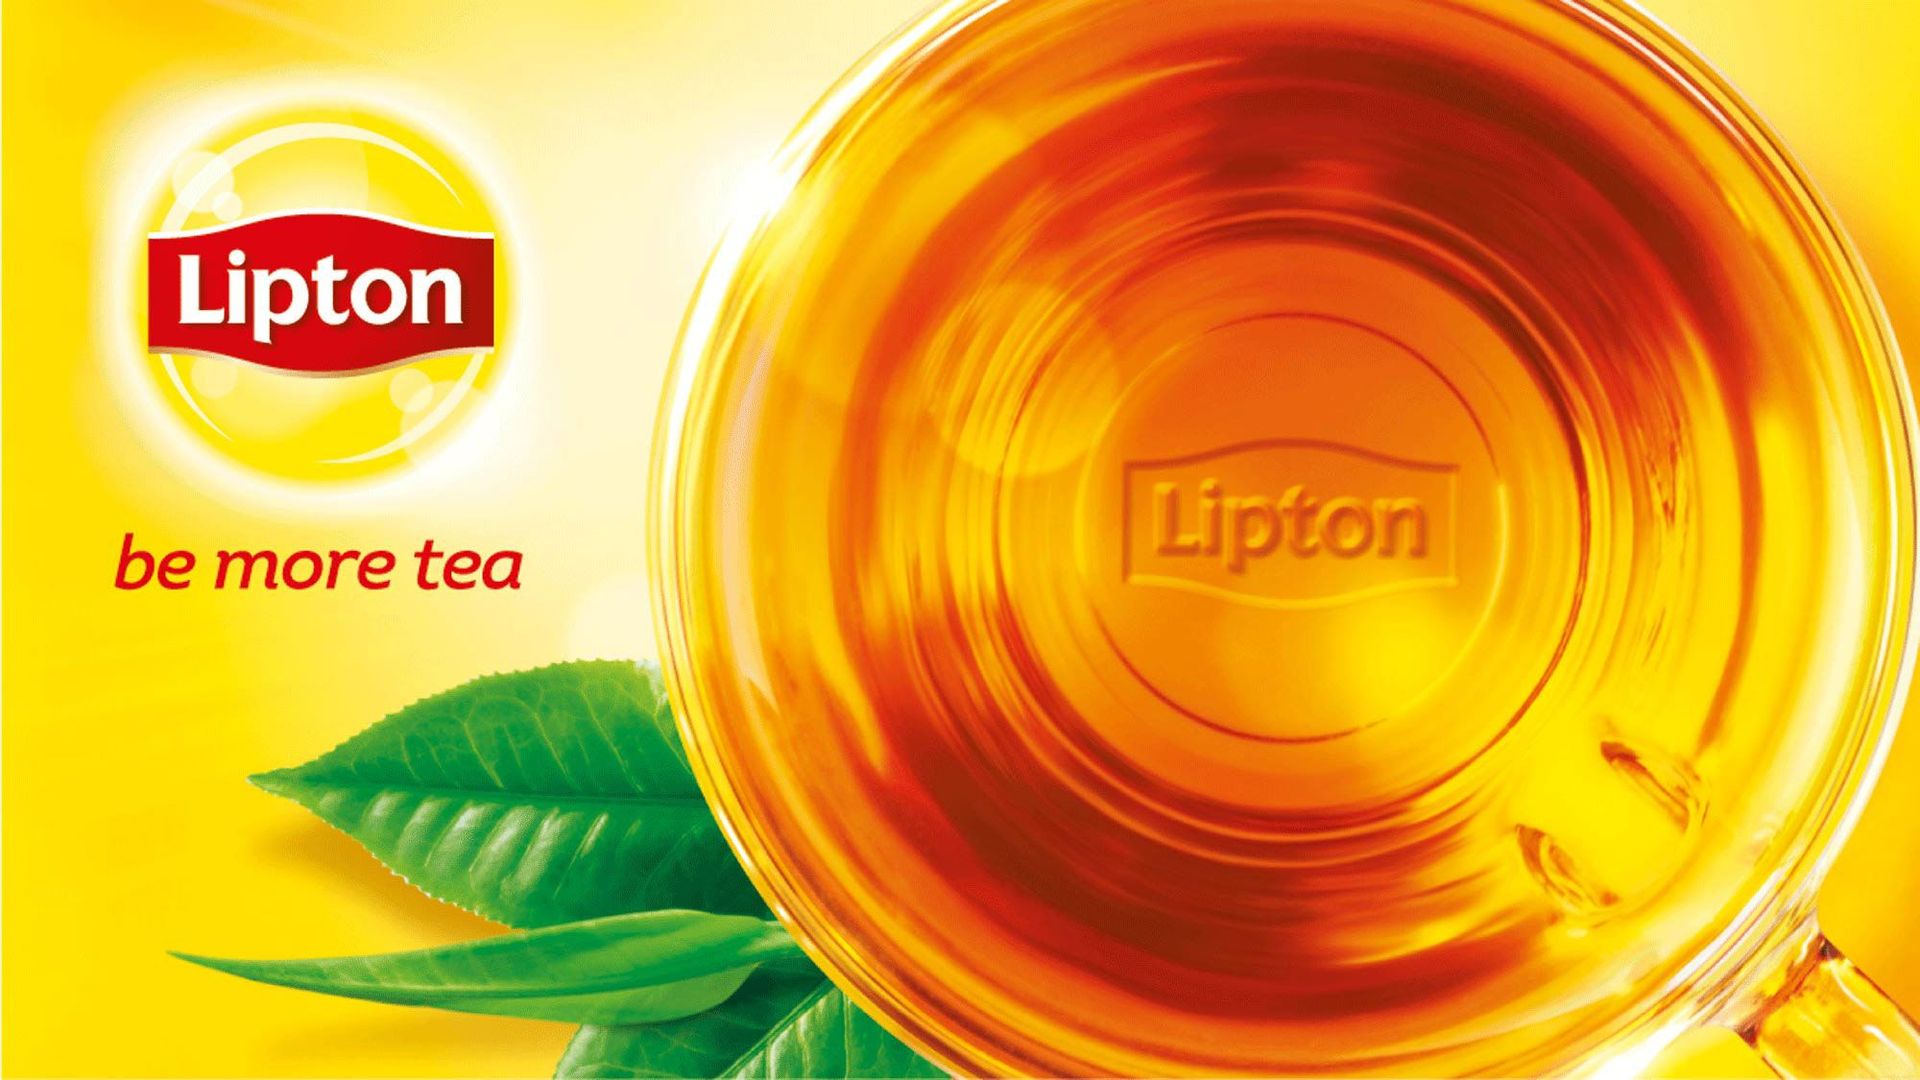 Cup of Lipton tea